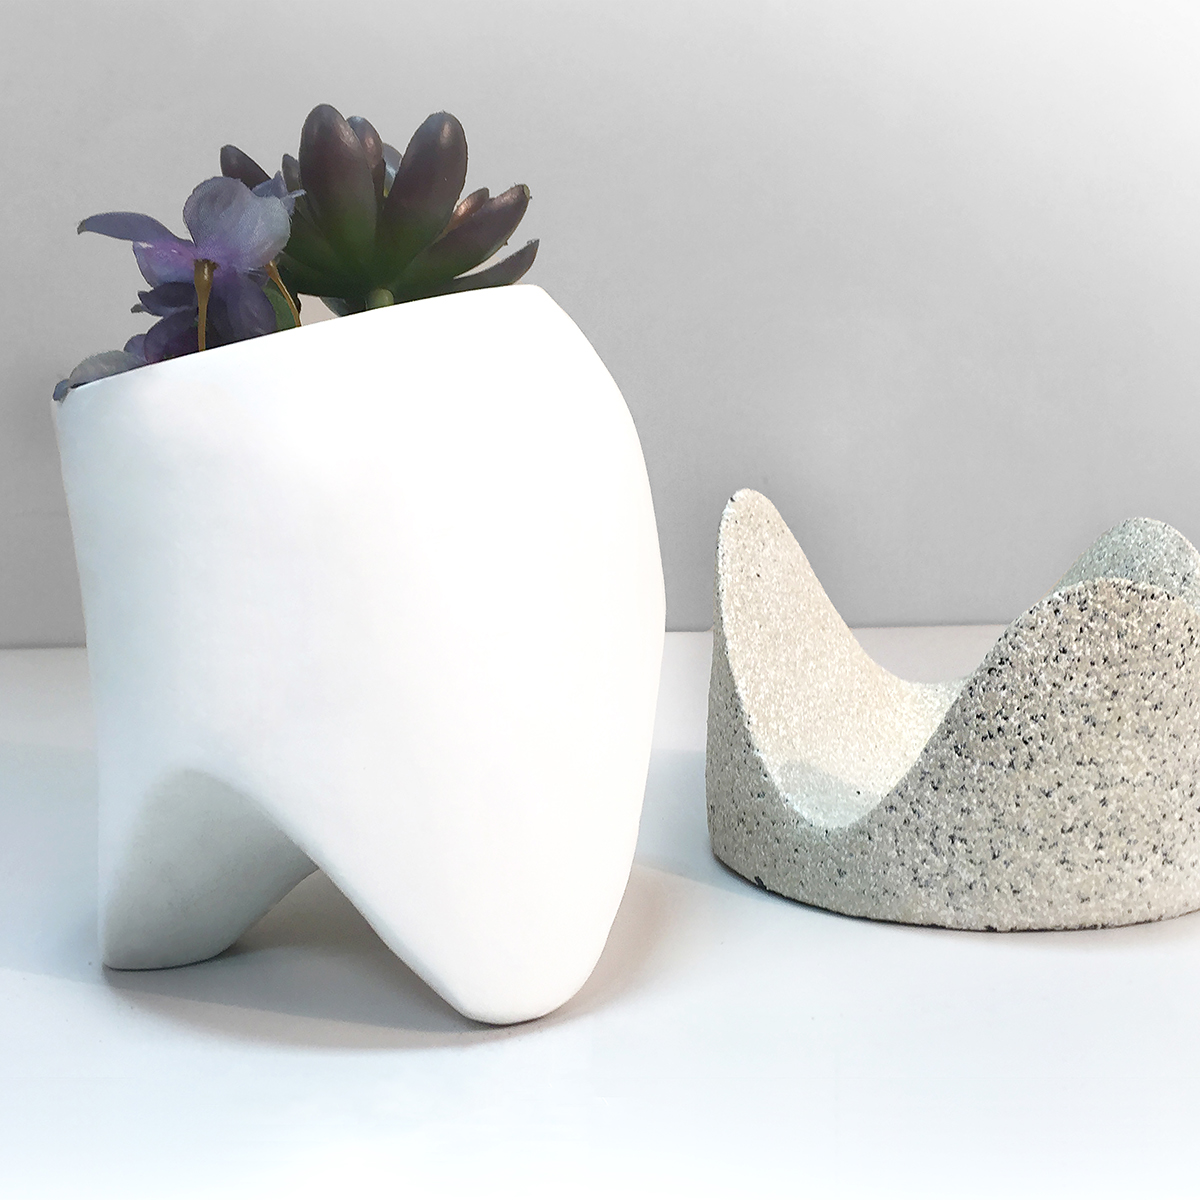 Planter separable ceramic mobility Sustainability ergonomic Flexibility eco Plant pot